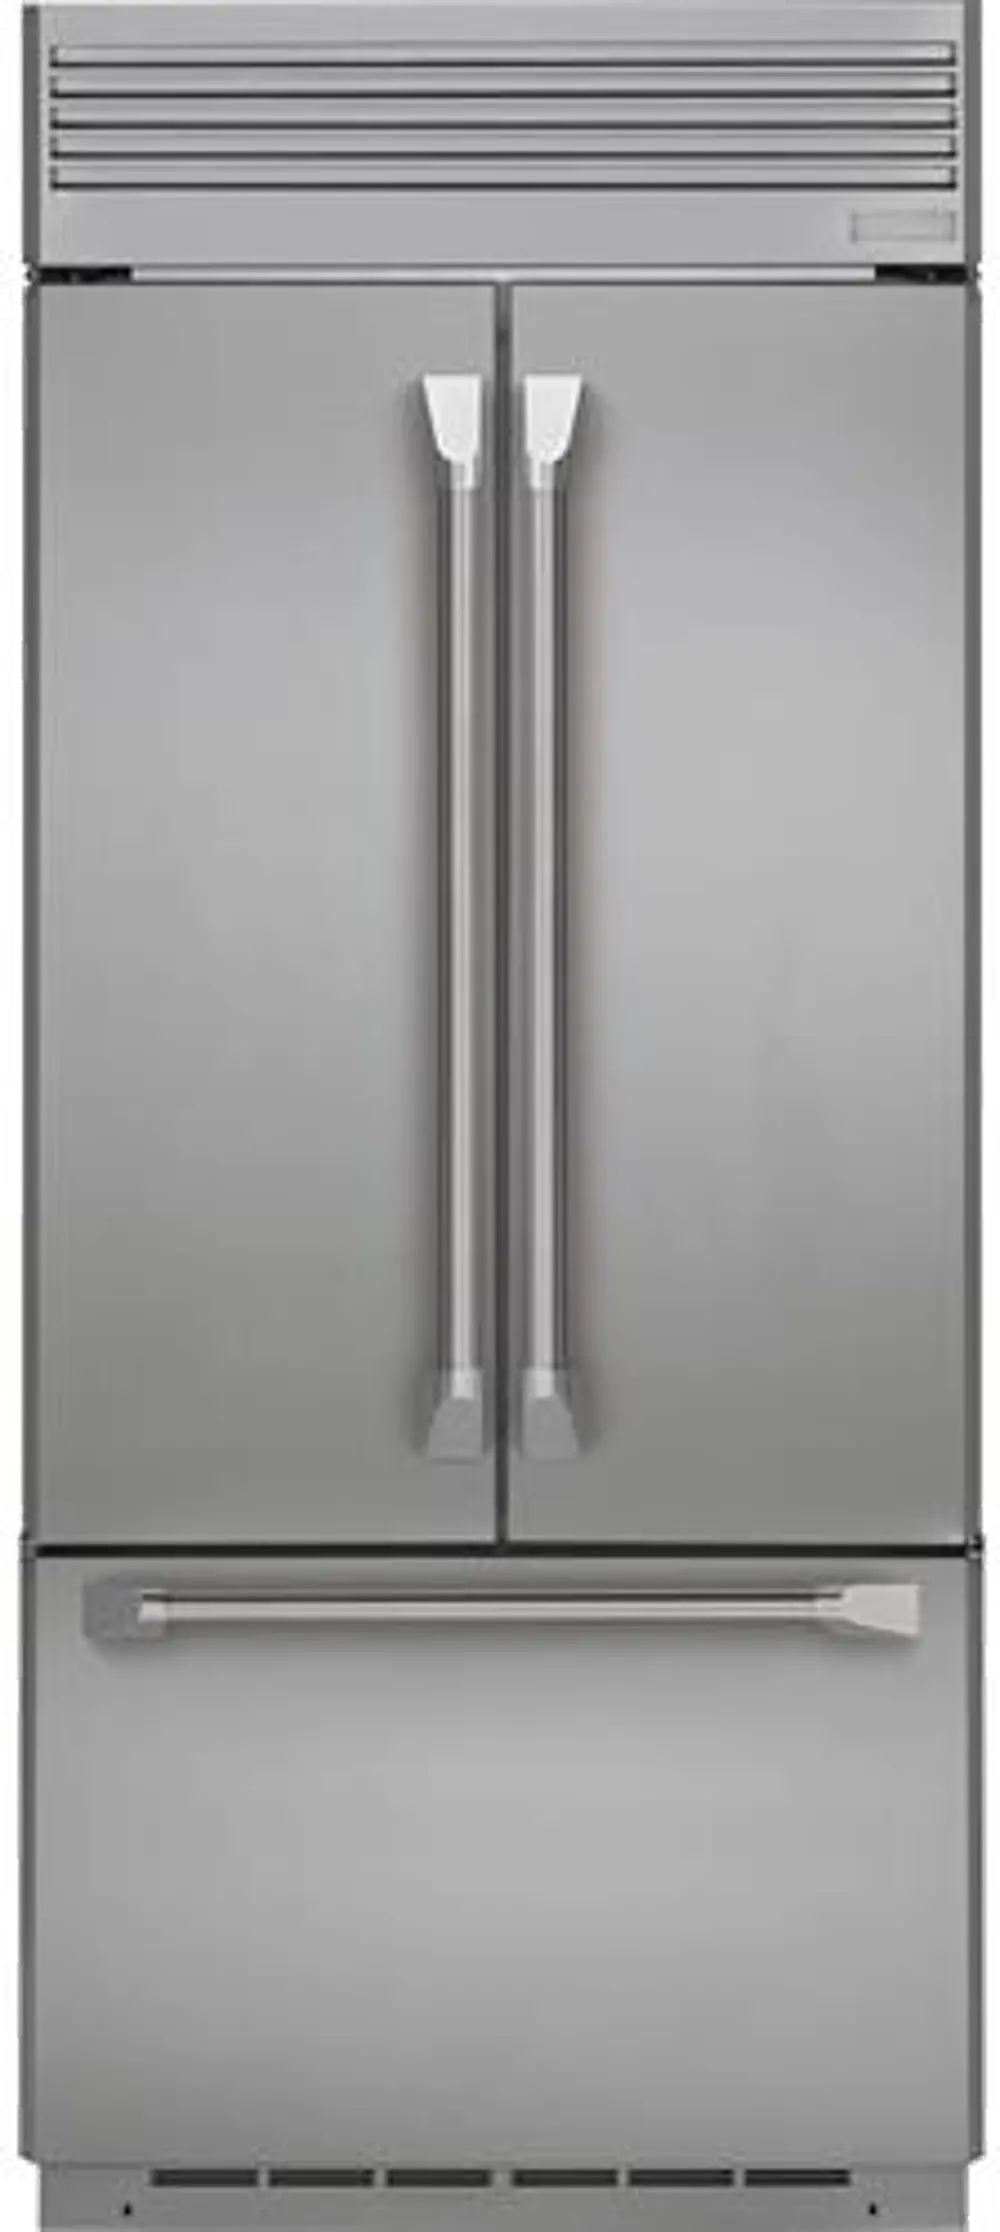 ZIPP360NHSS Monogram French Door Refrigerator - 36 Inch Stainless Steel-1